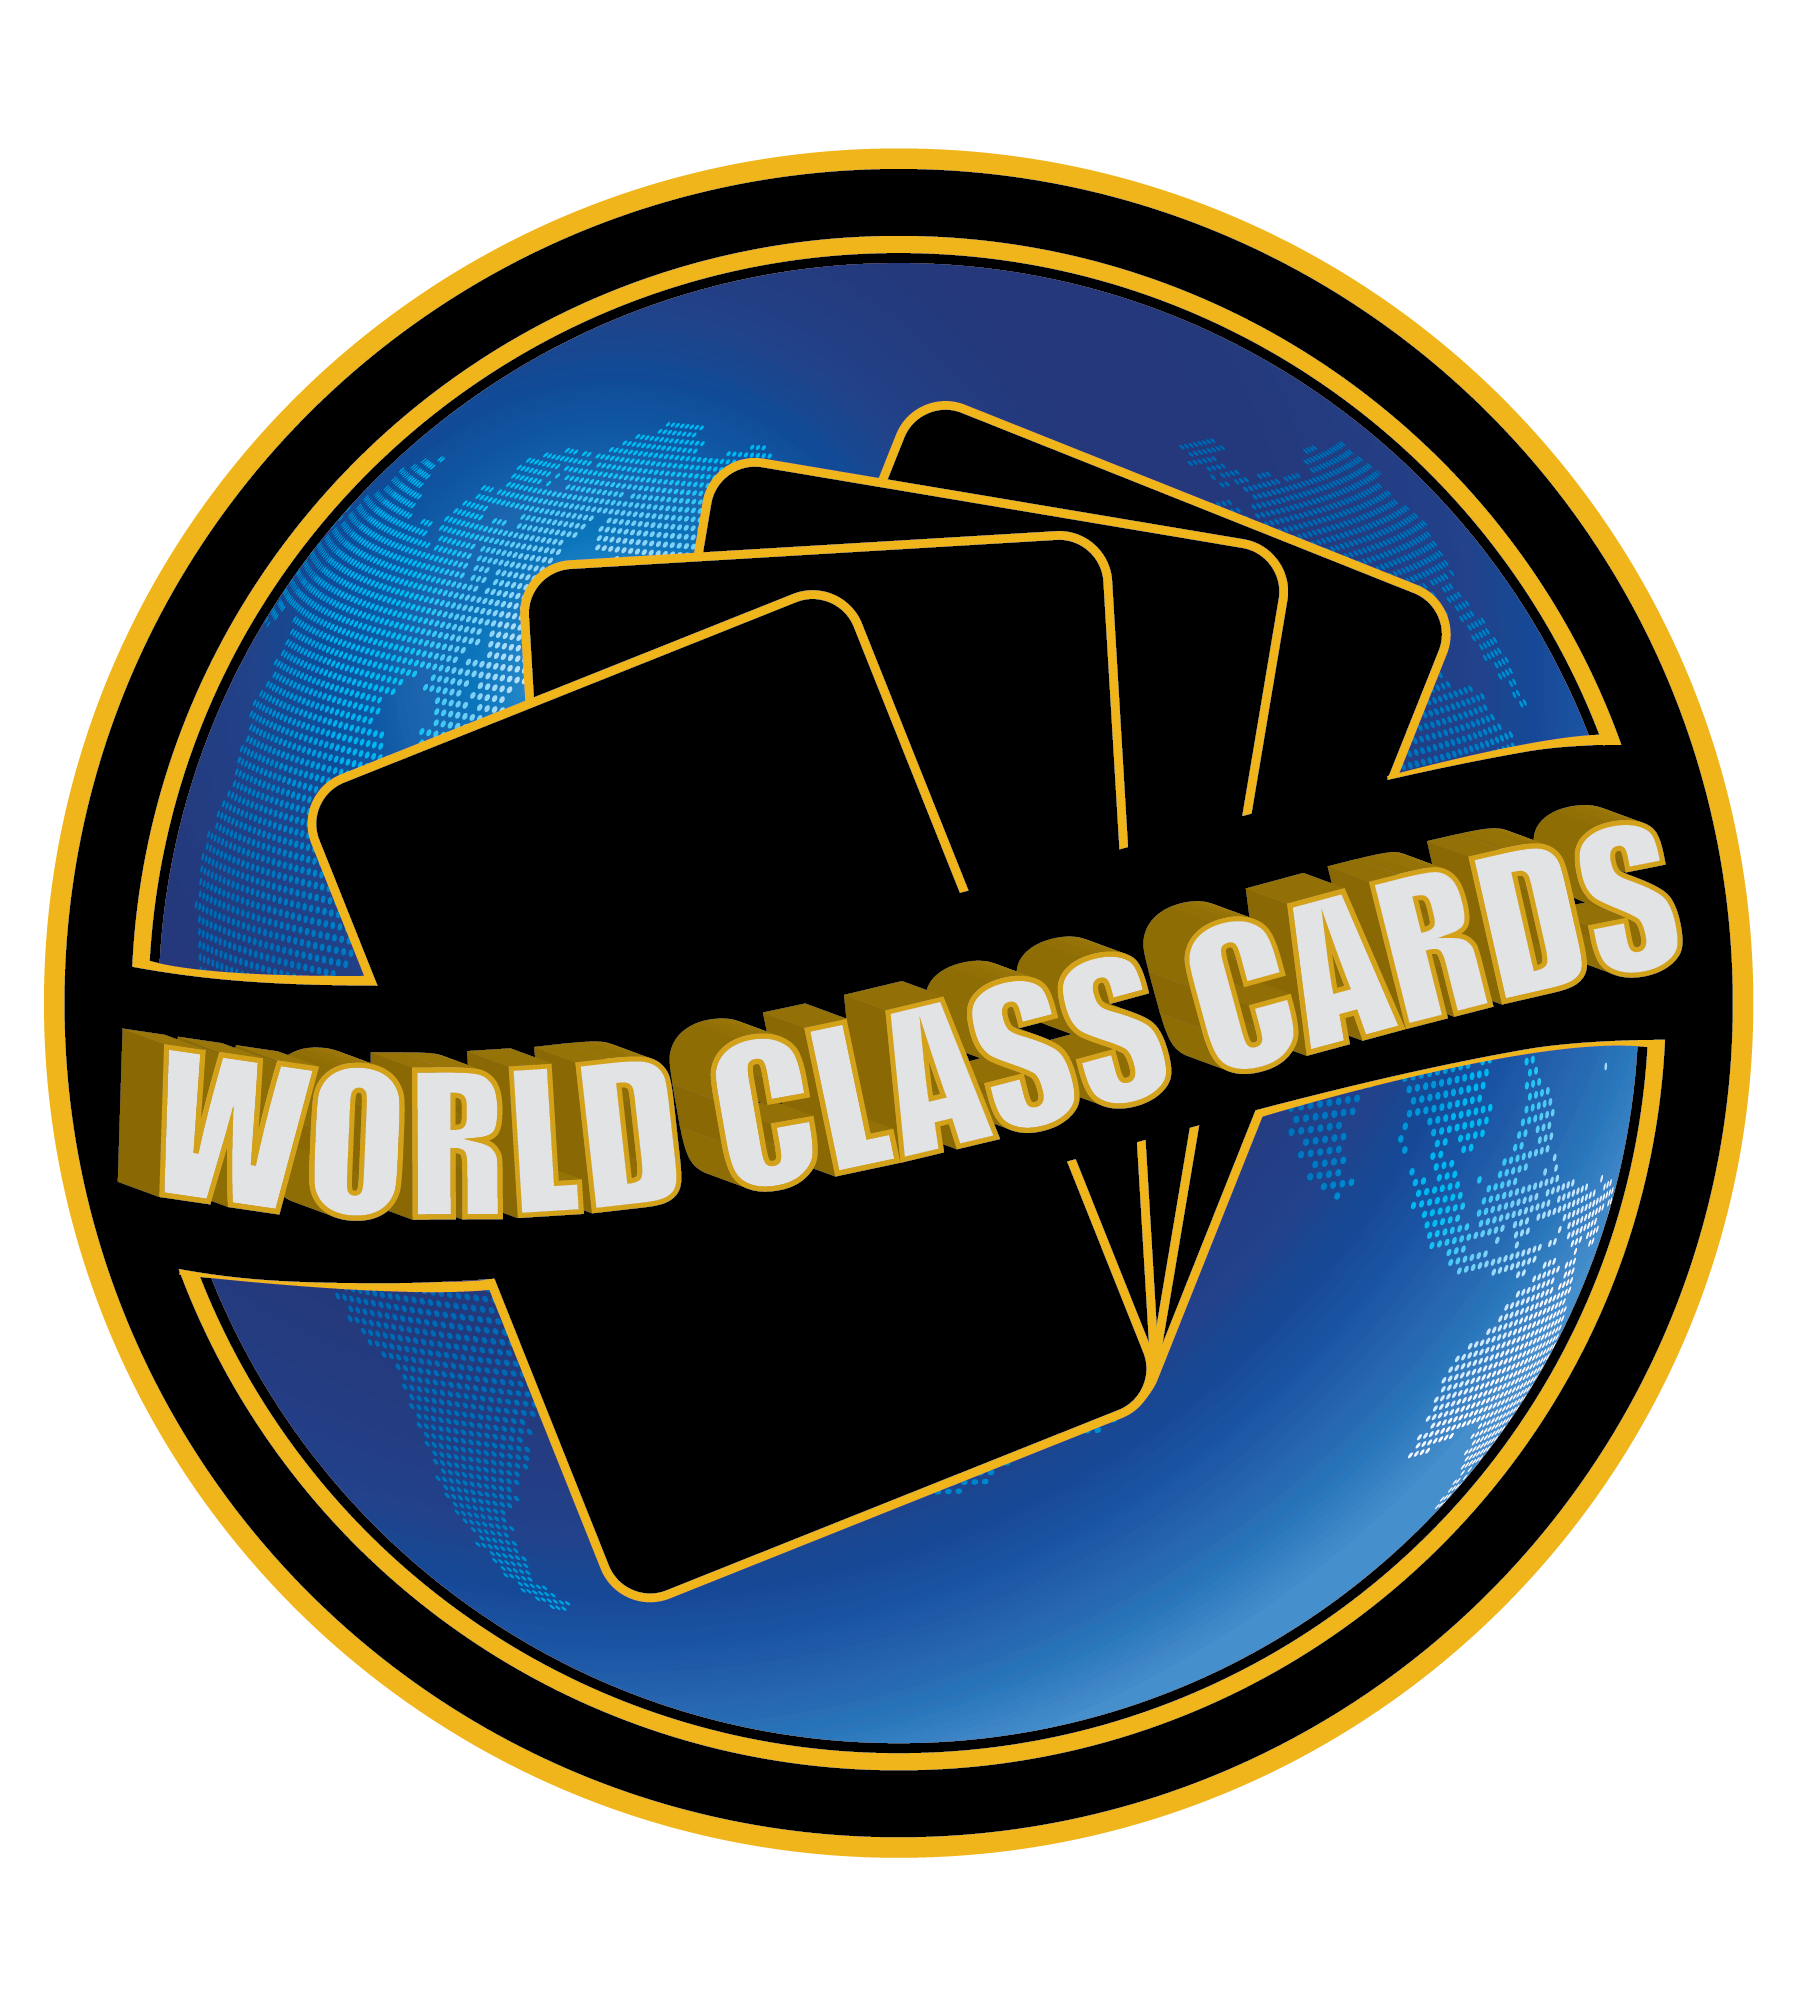 worldclasscardsllc